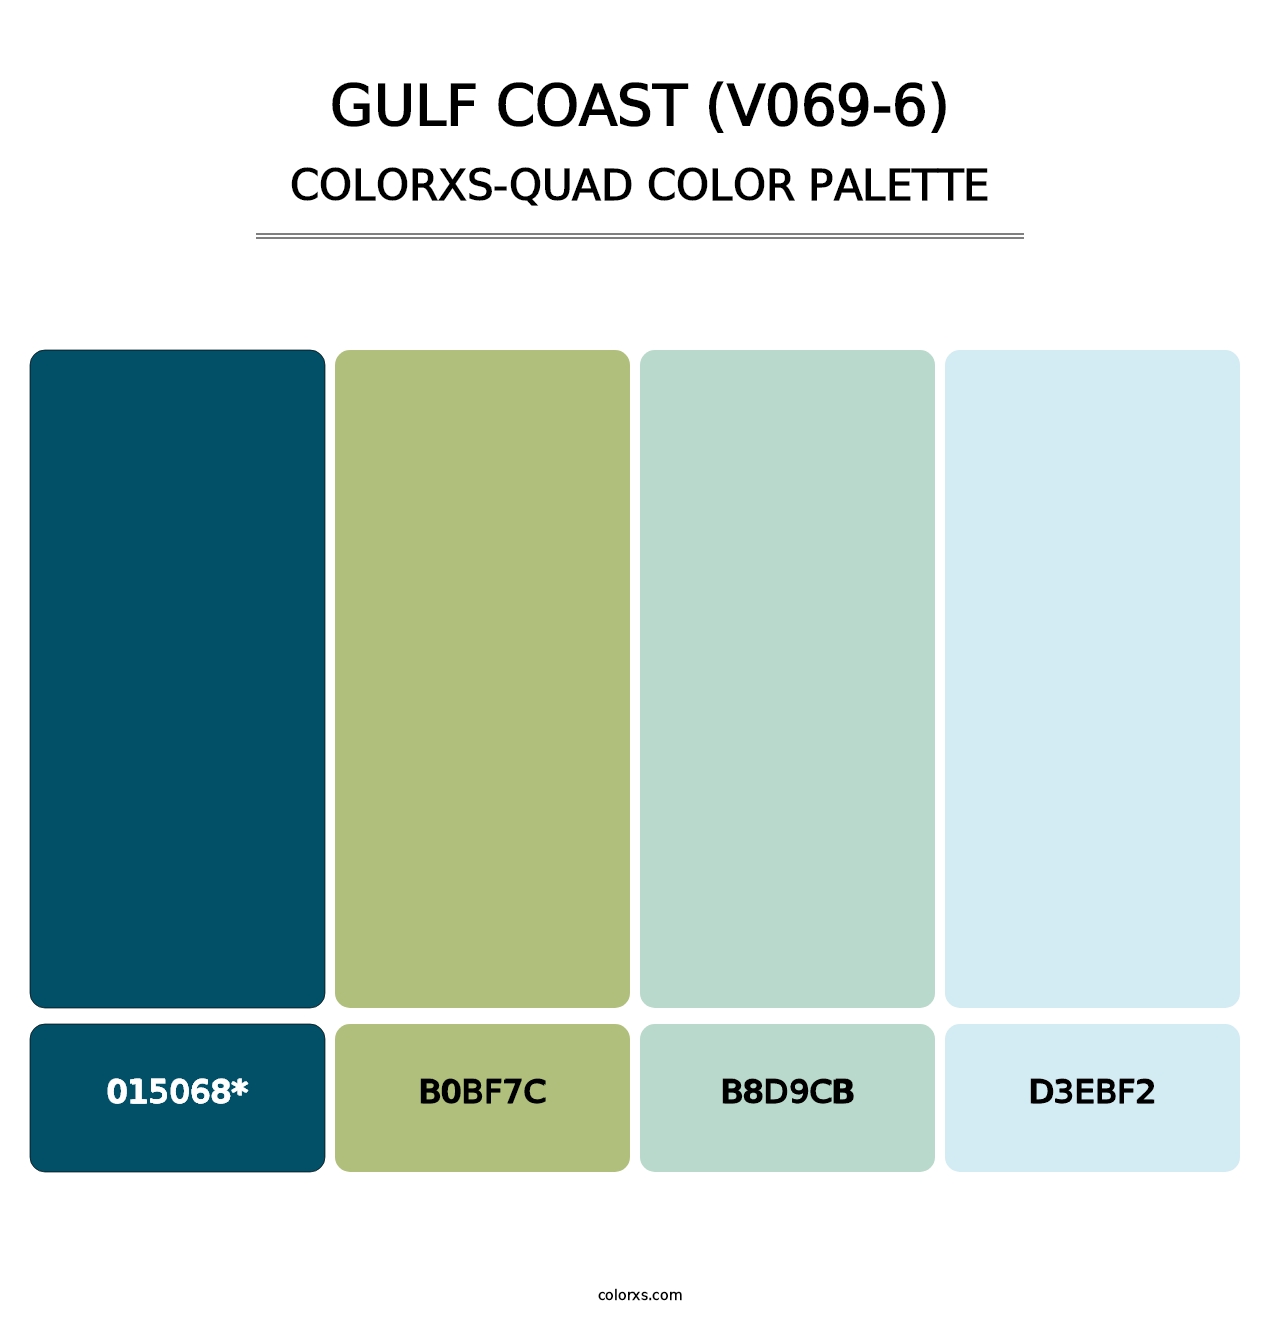 Gulf Coast (V069-6) - Colorxs Quad Palette